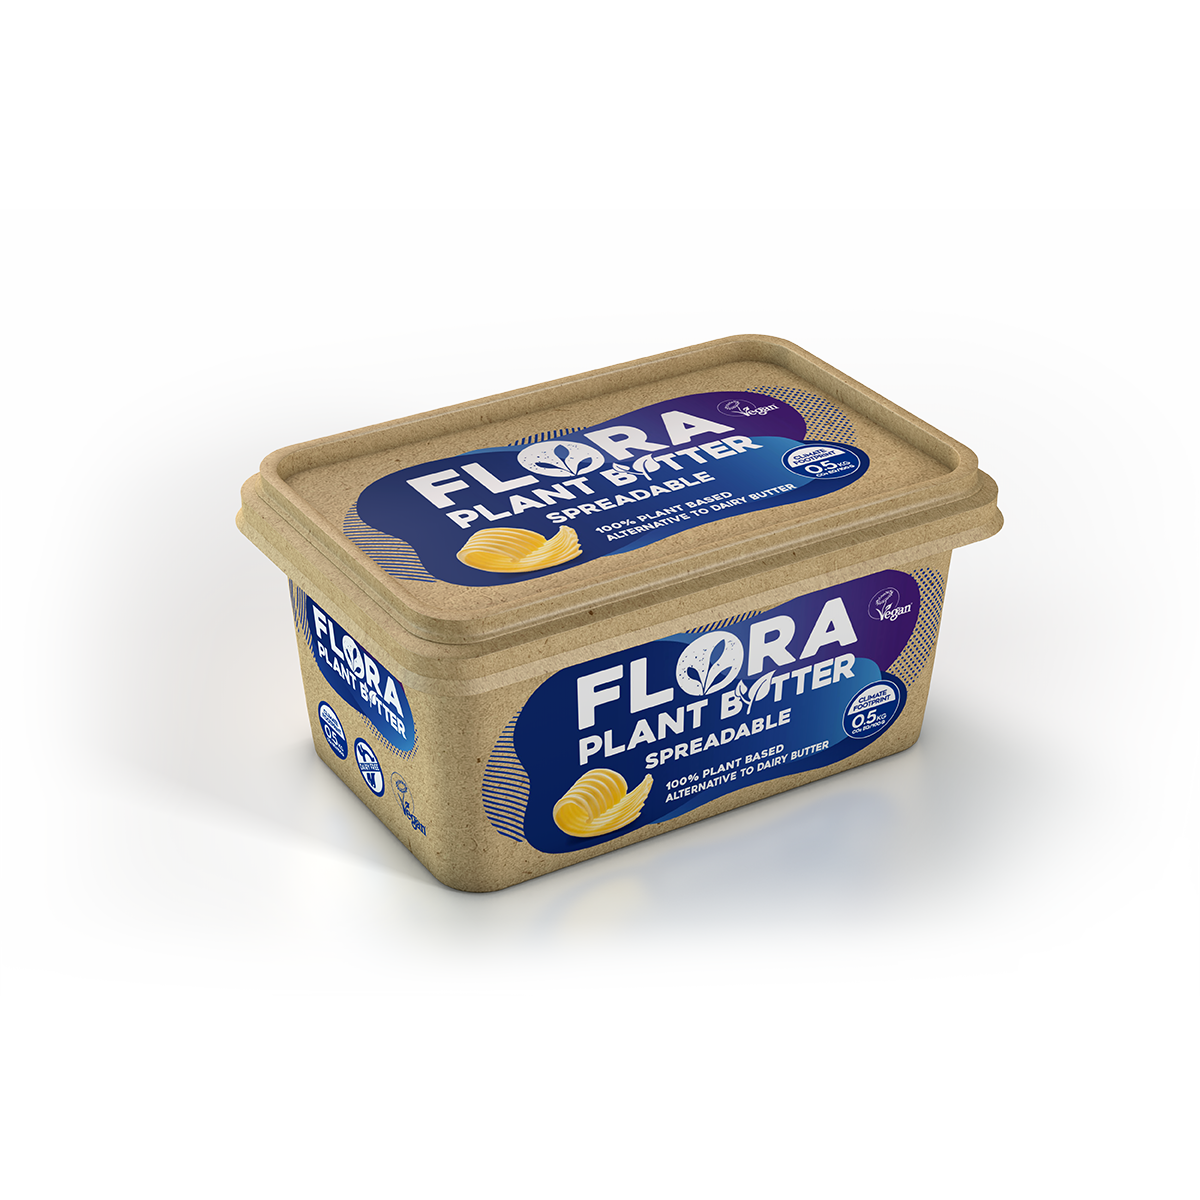 Flora’s new plant-based butter alternative: Flora Plant B+tter Spreadable